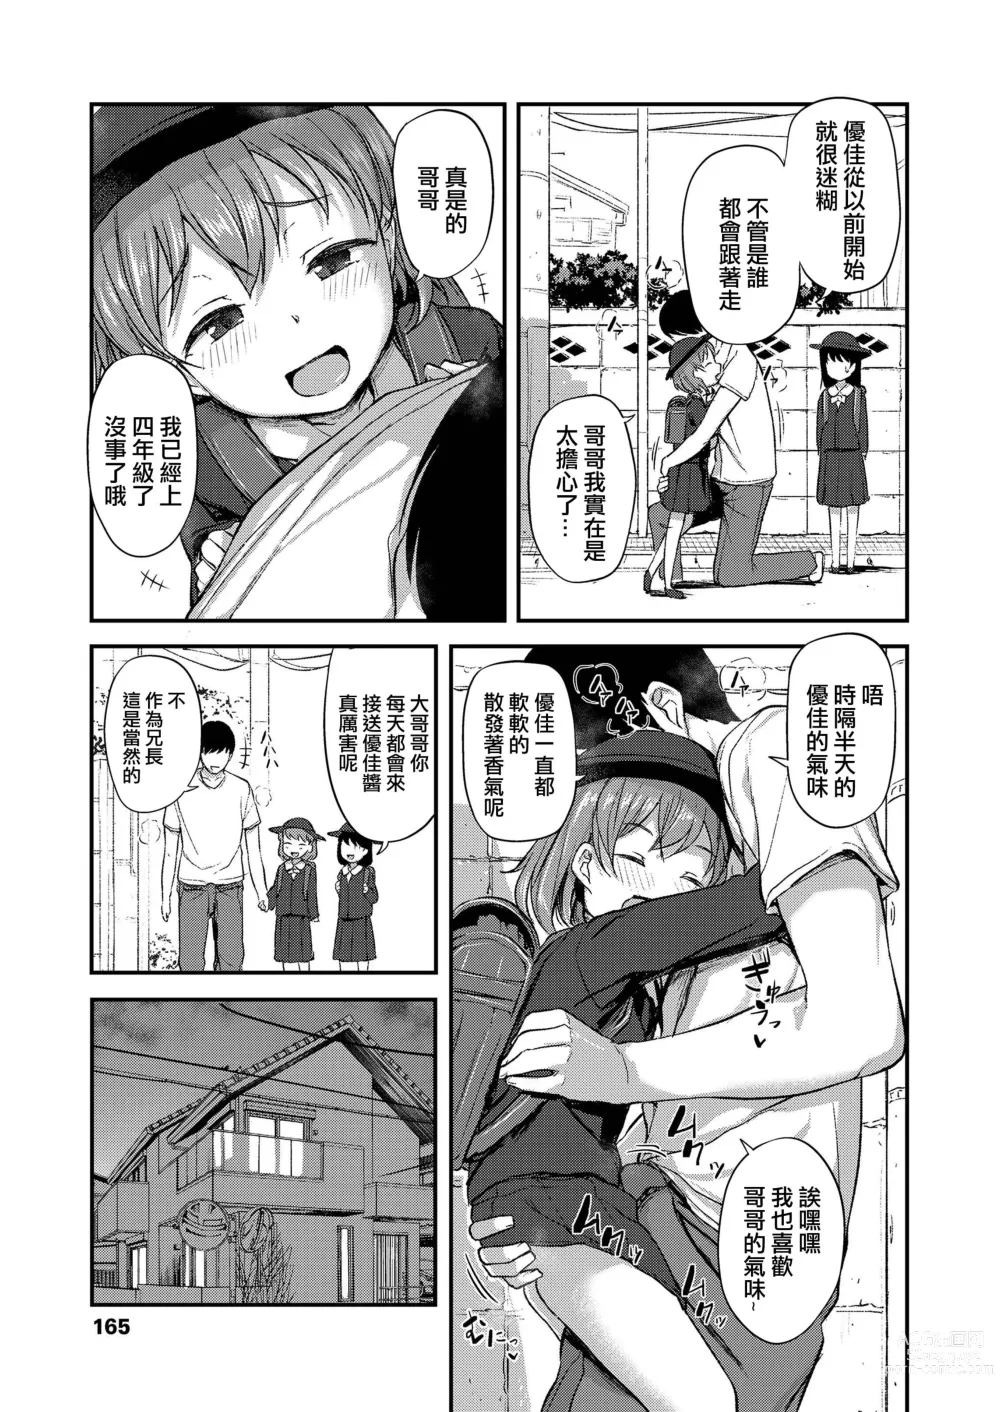 Page 3 of doujinshi Onii-chan no Okuri Mukae